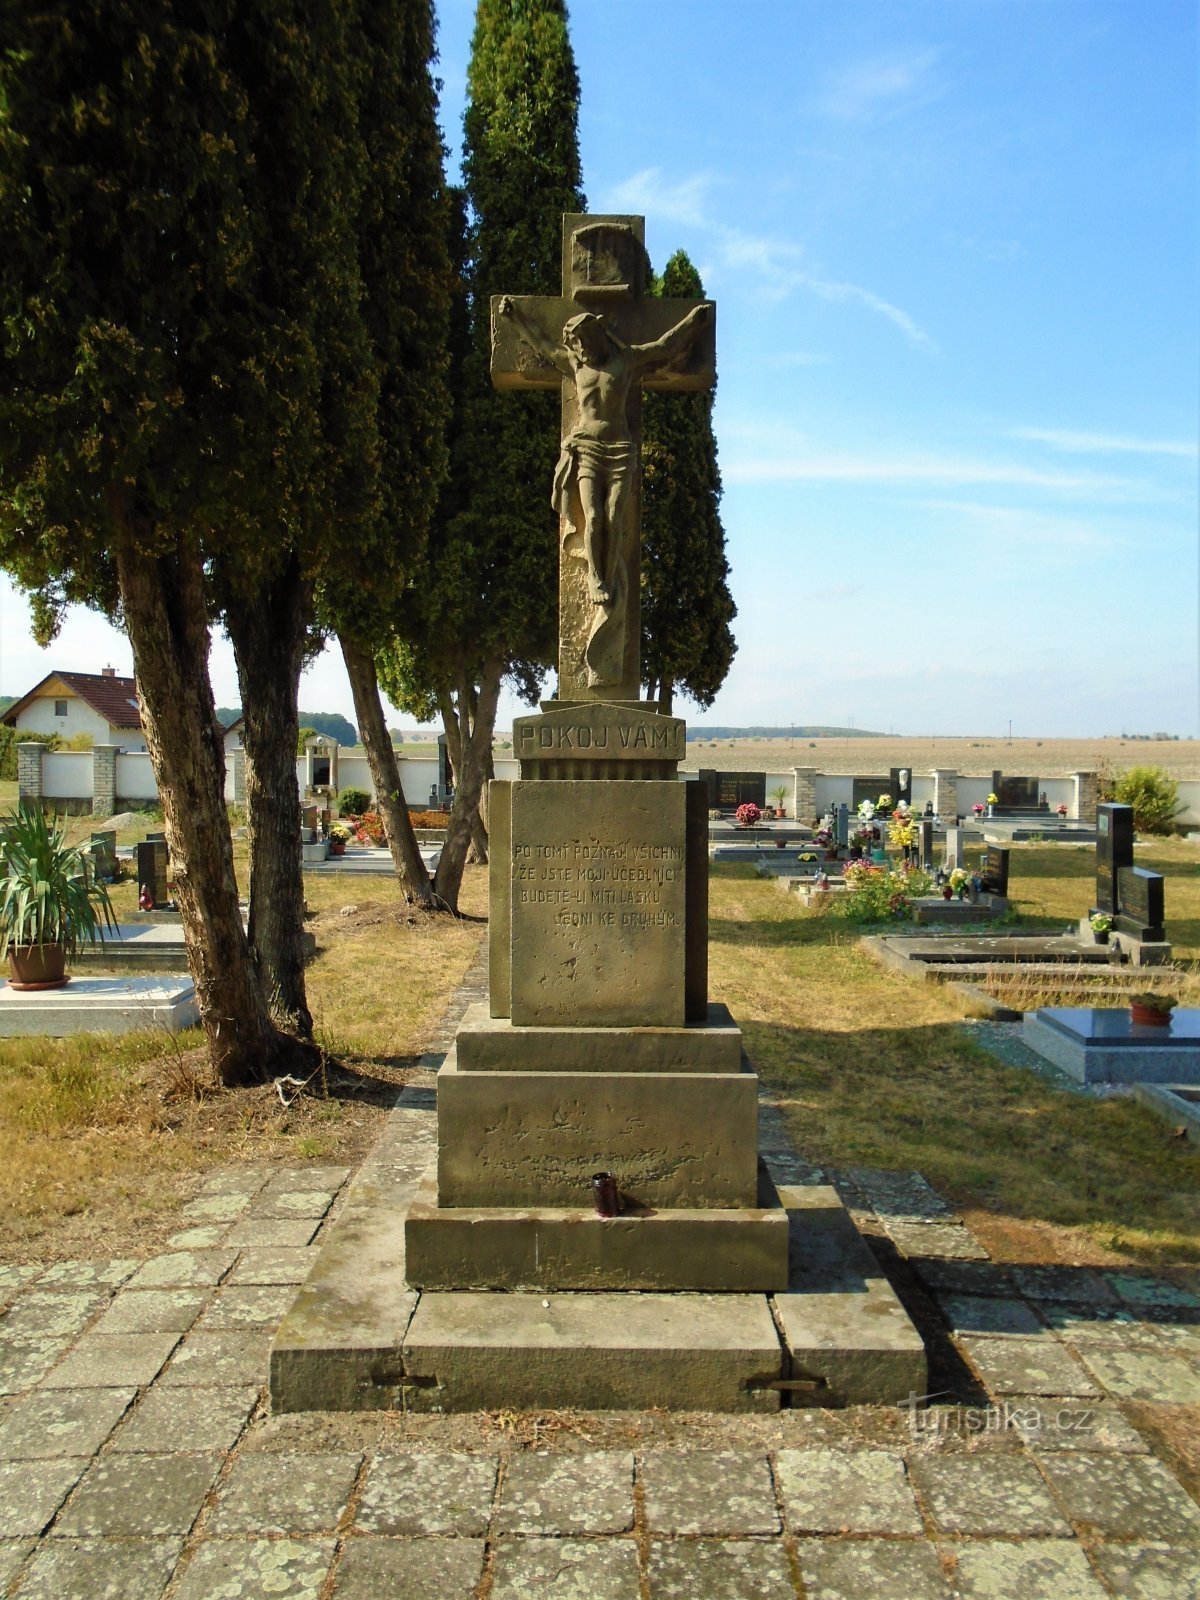 Croce del cimitero (Lejšovka)